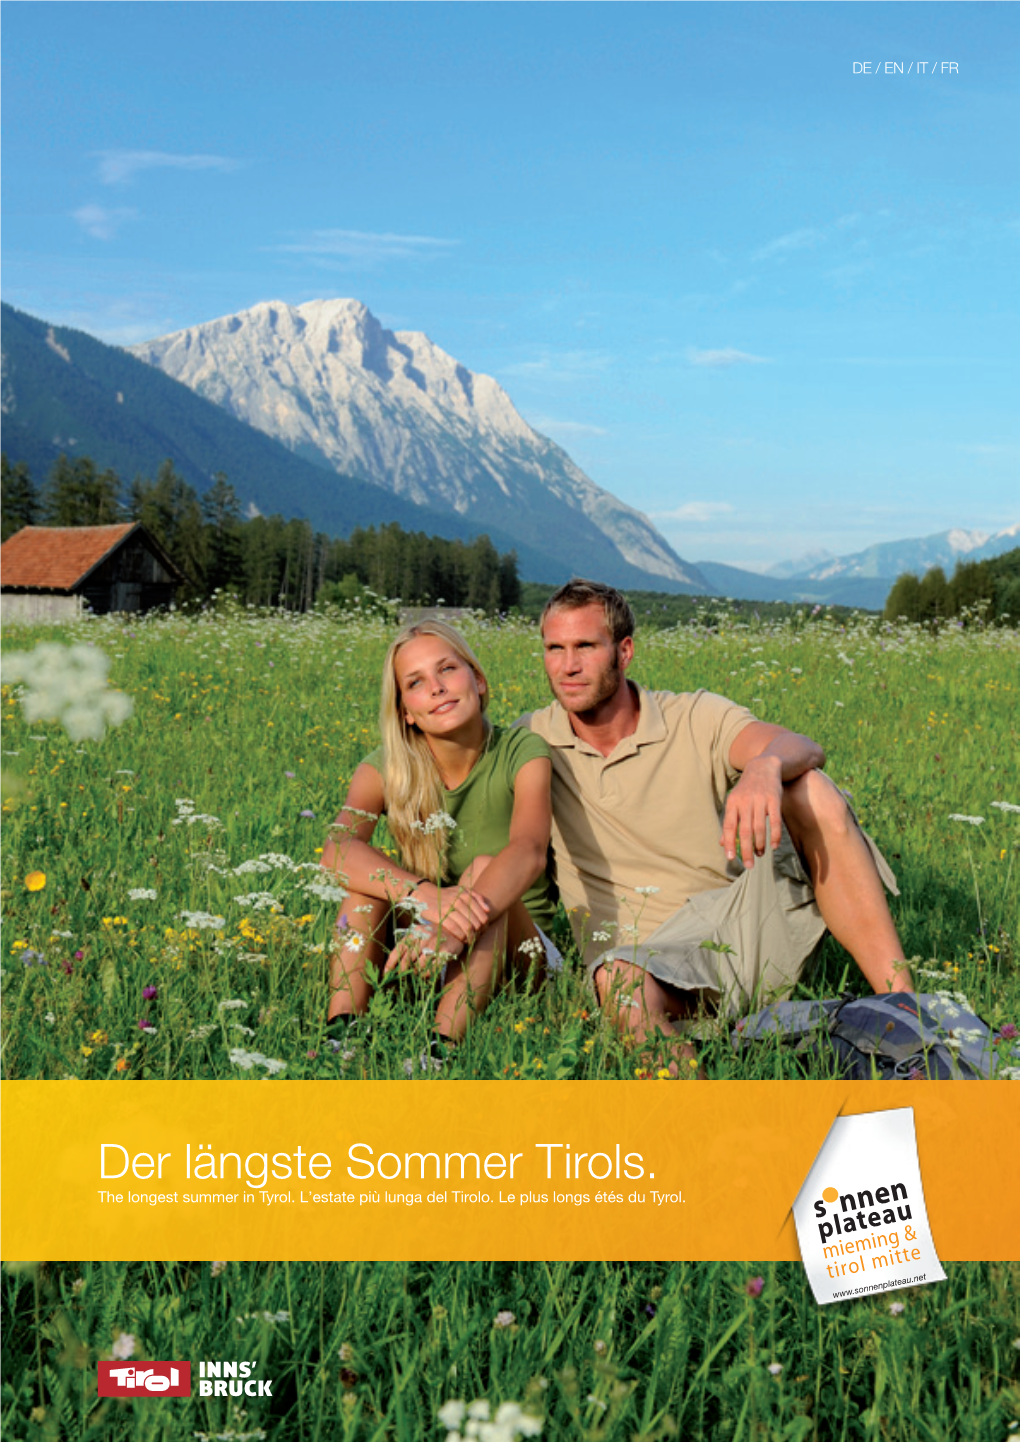 Der Längste Sommer Tirols. ‚ the Longest Summer in Tyrol